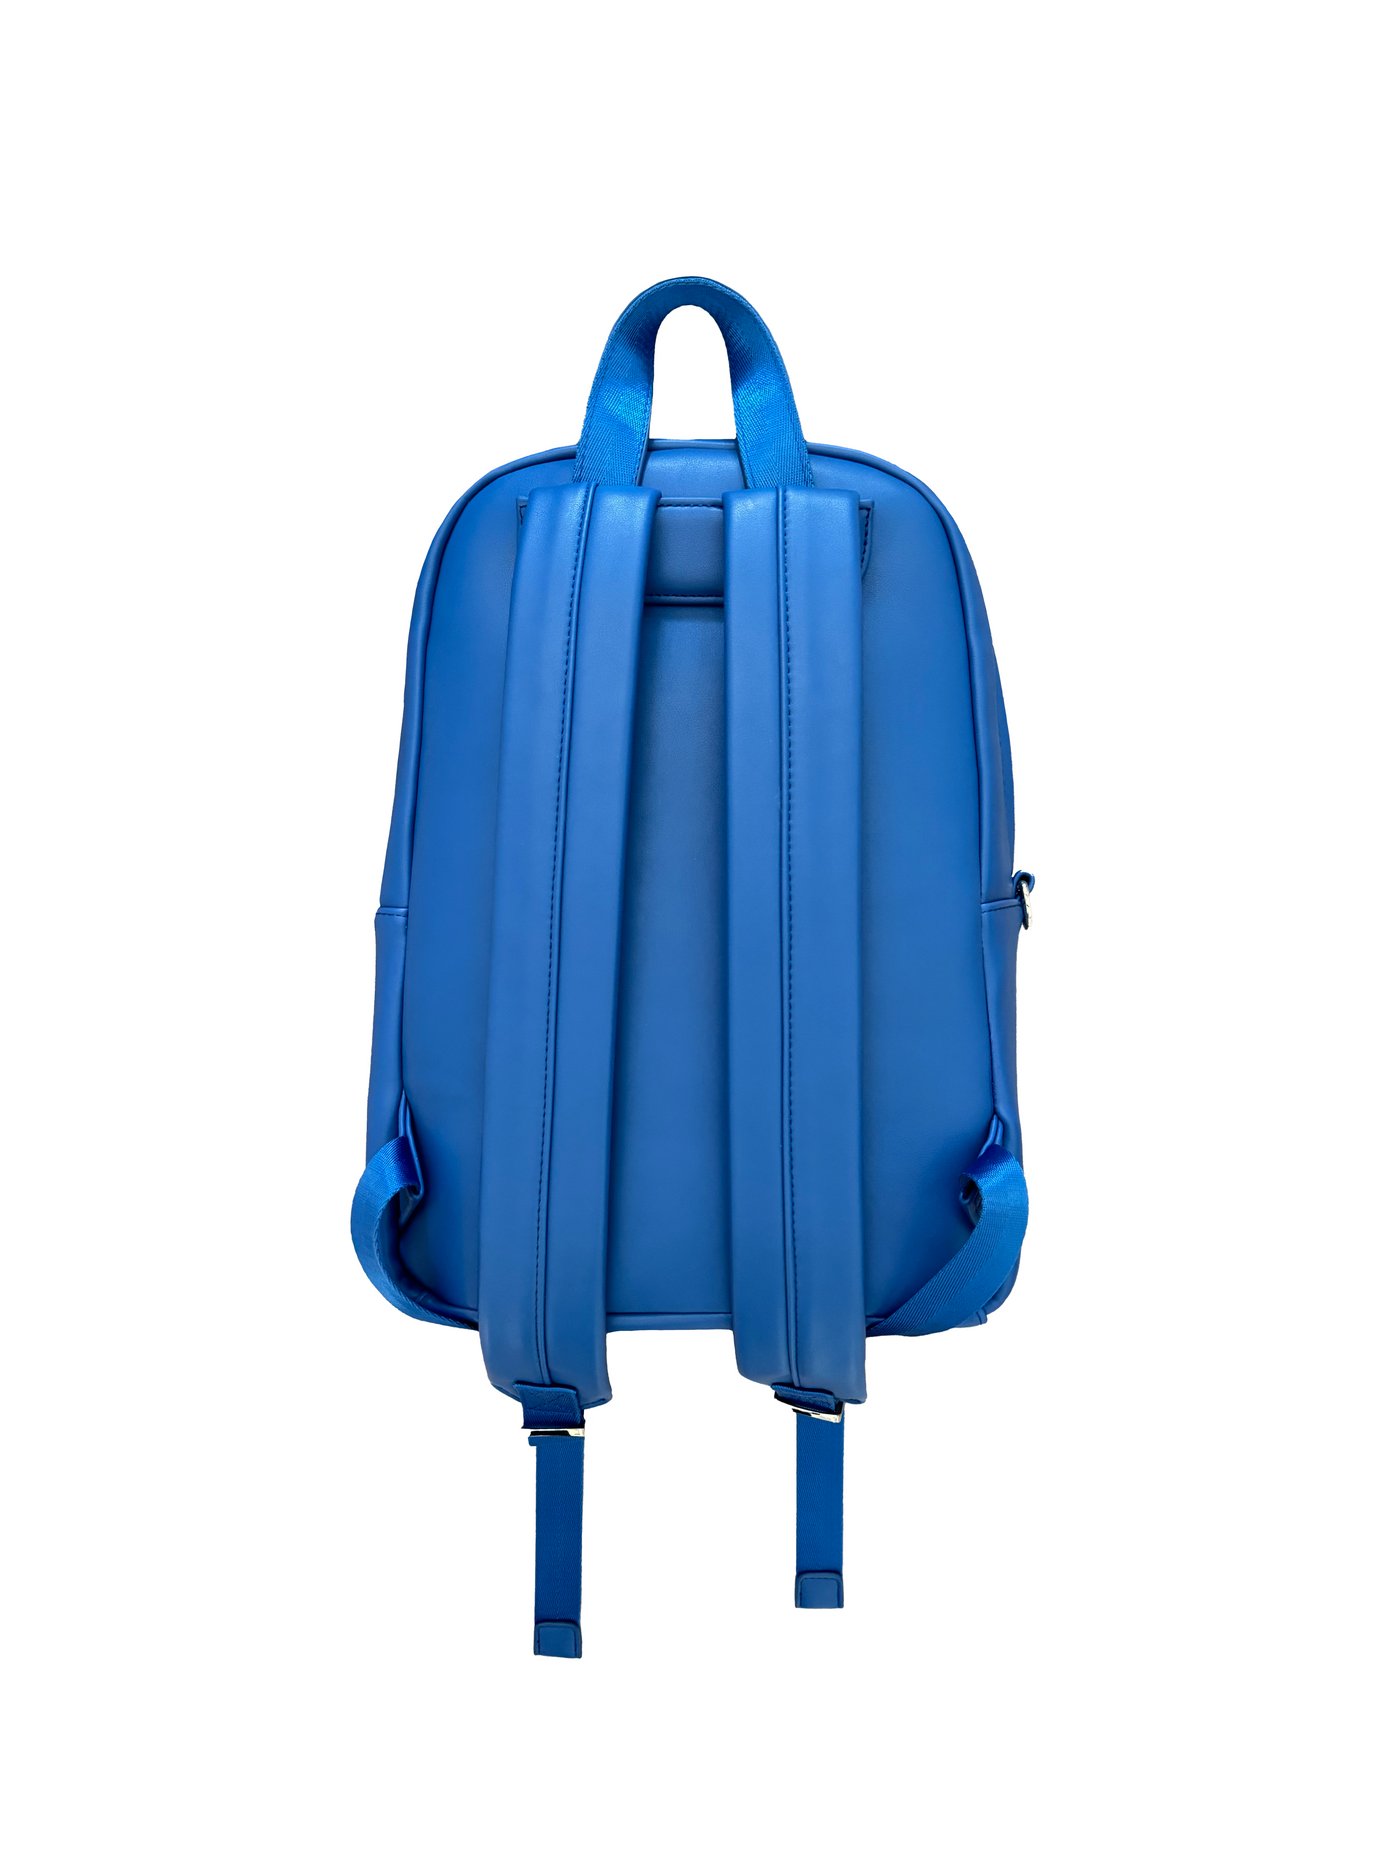 YL Backpack - Blue